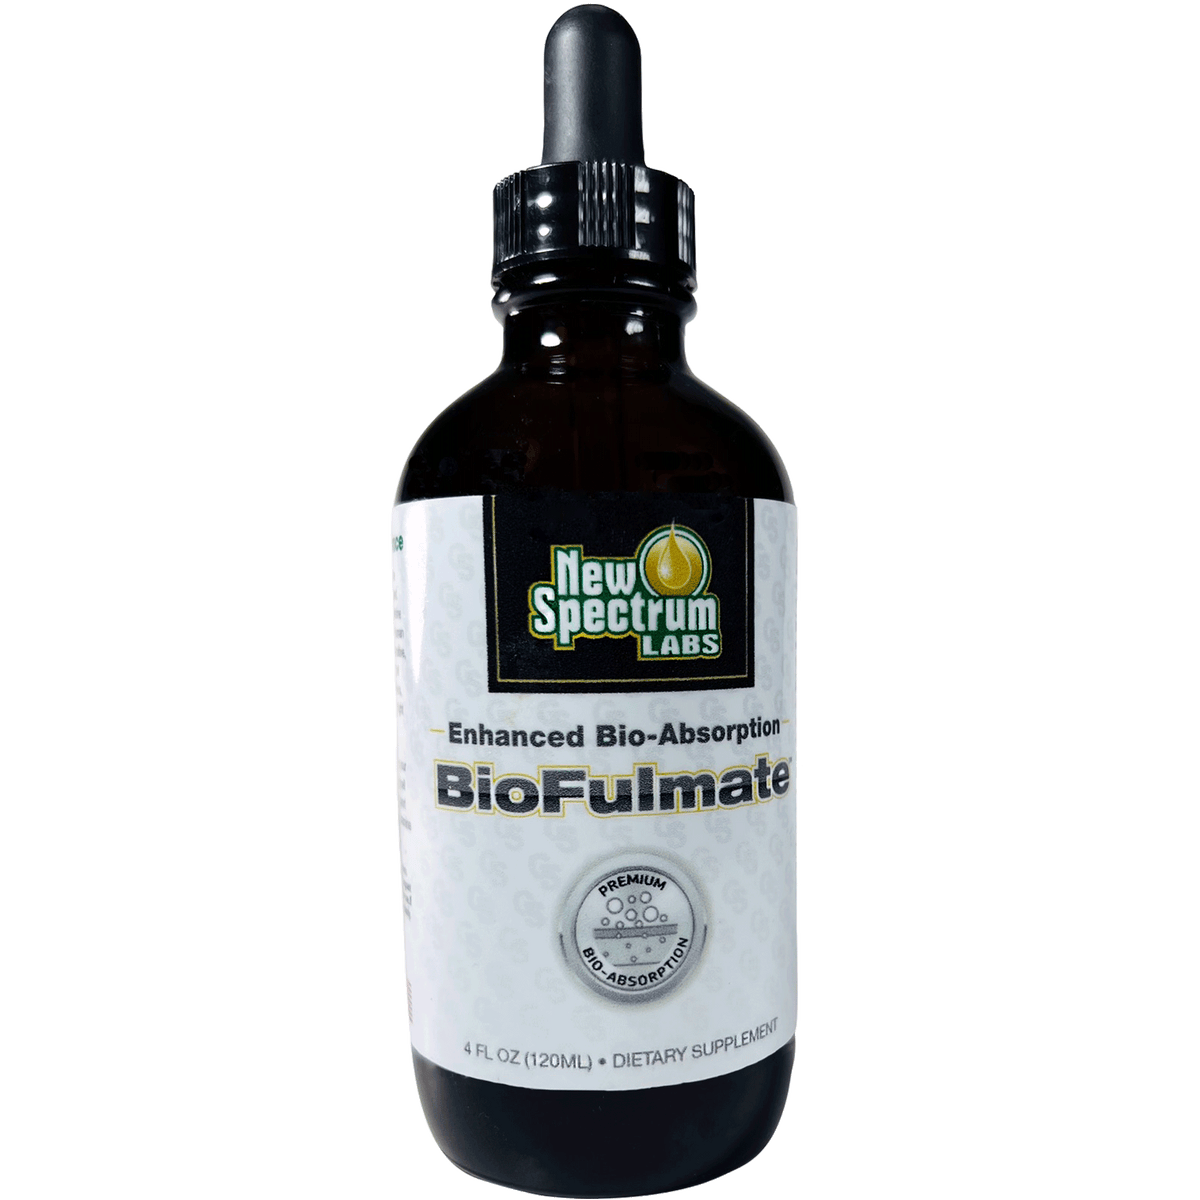 BioFulmate